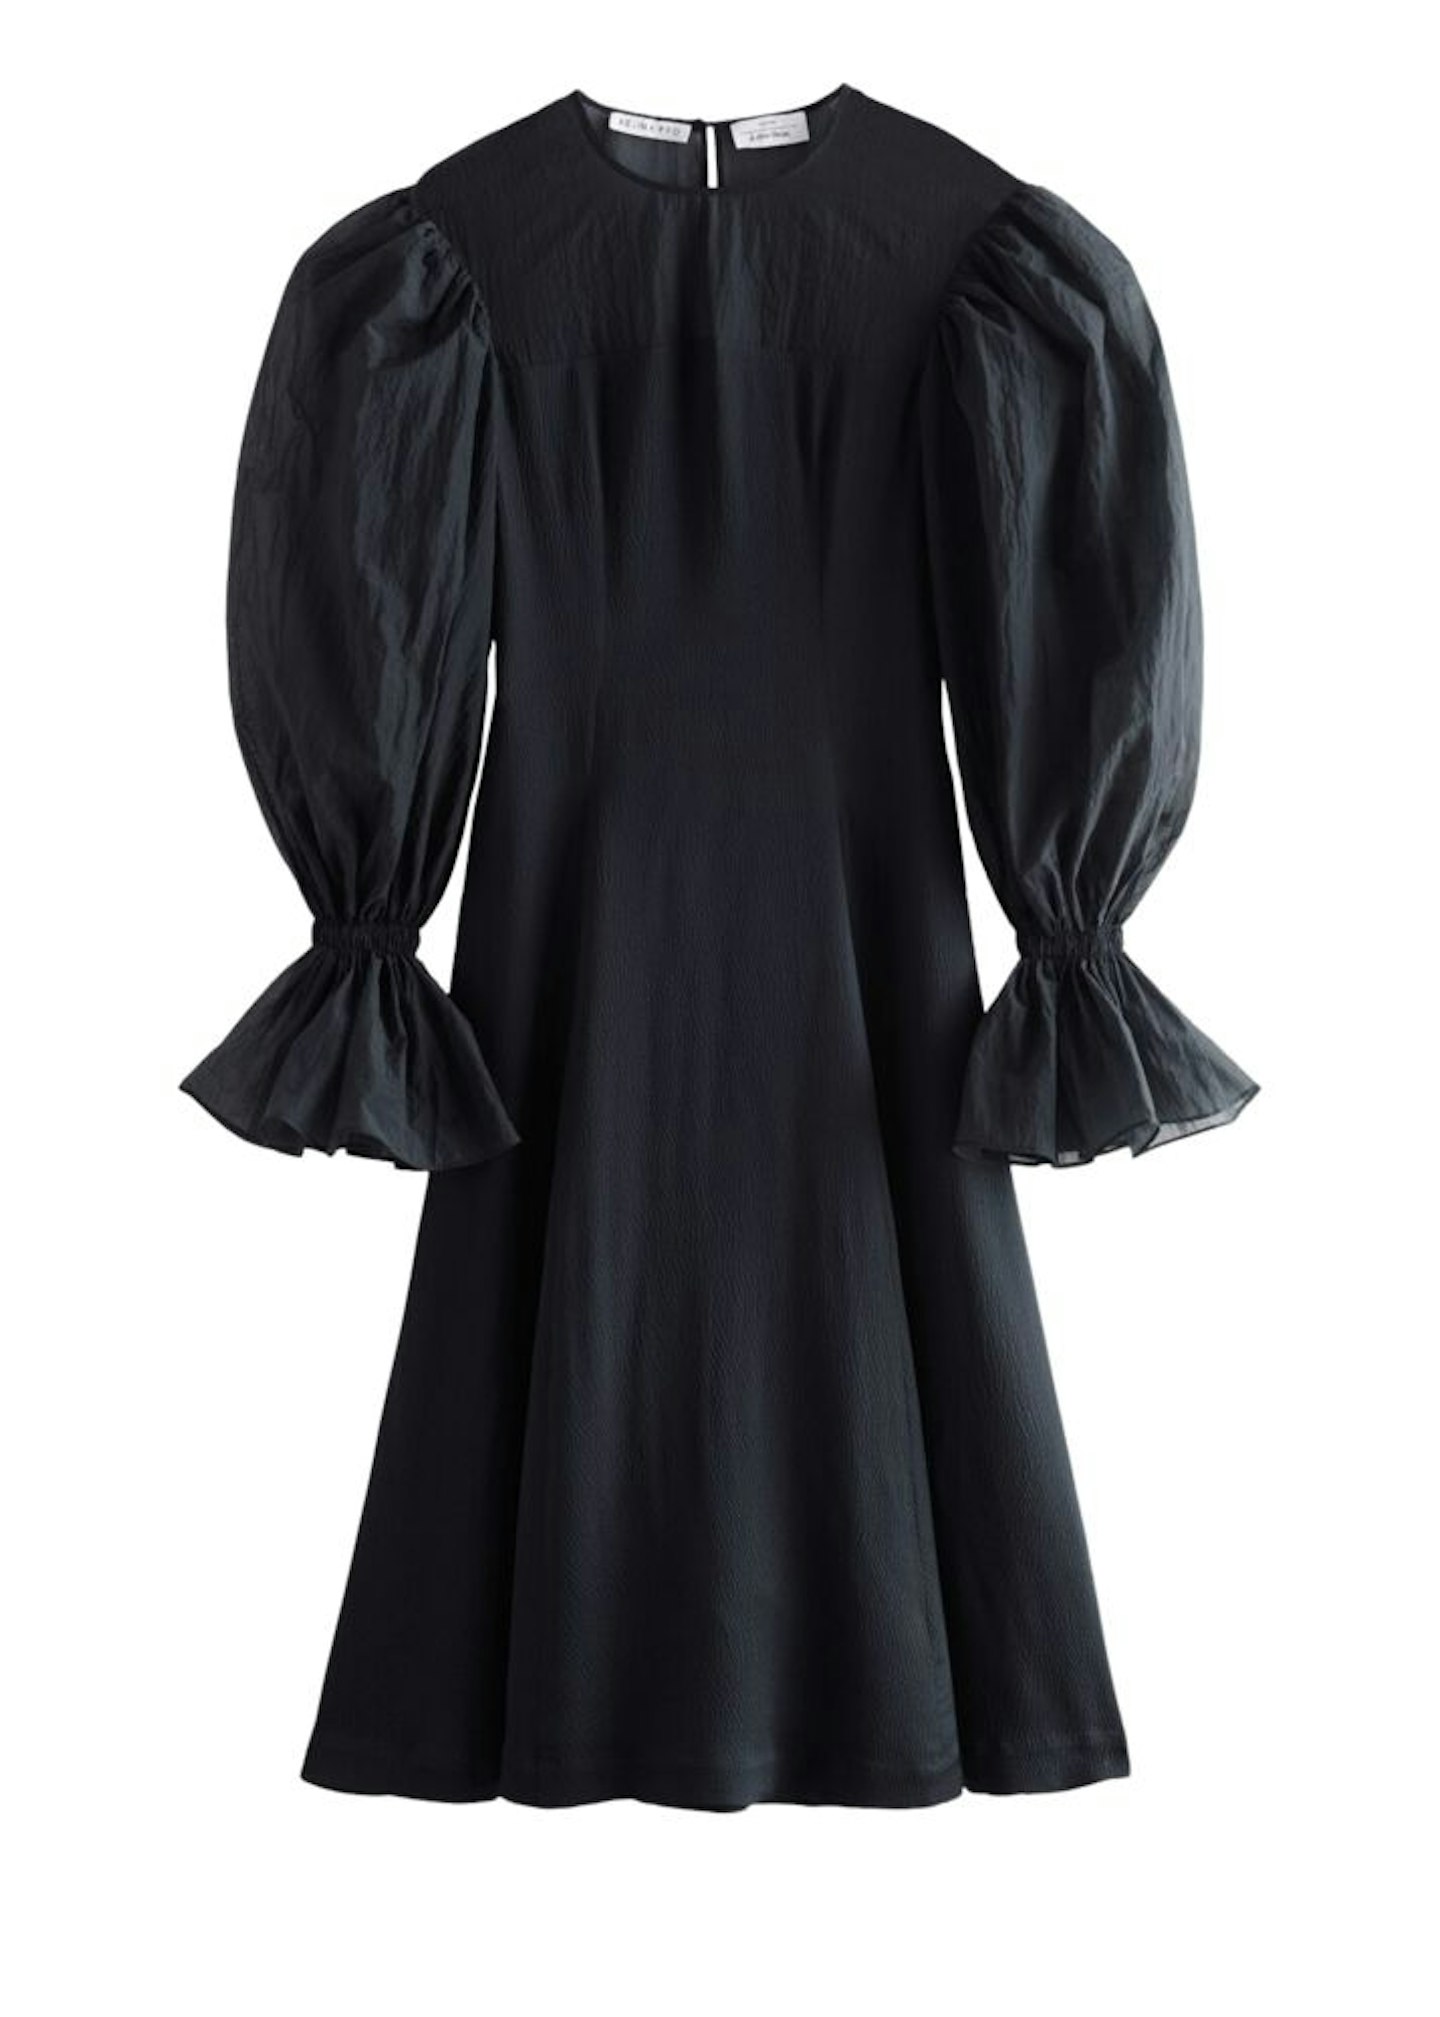 Rejina Pyo & Other Stories, Black Dress, £175